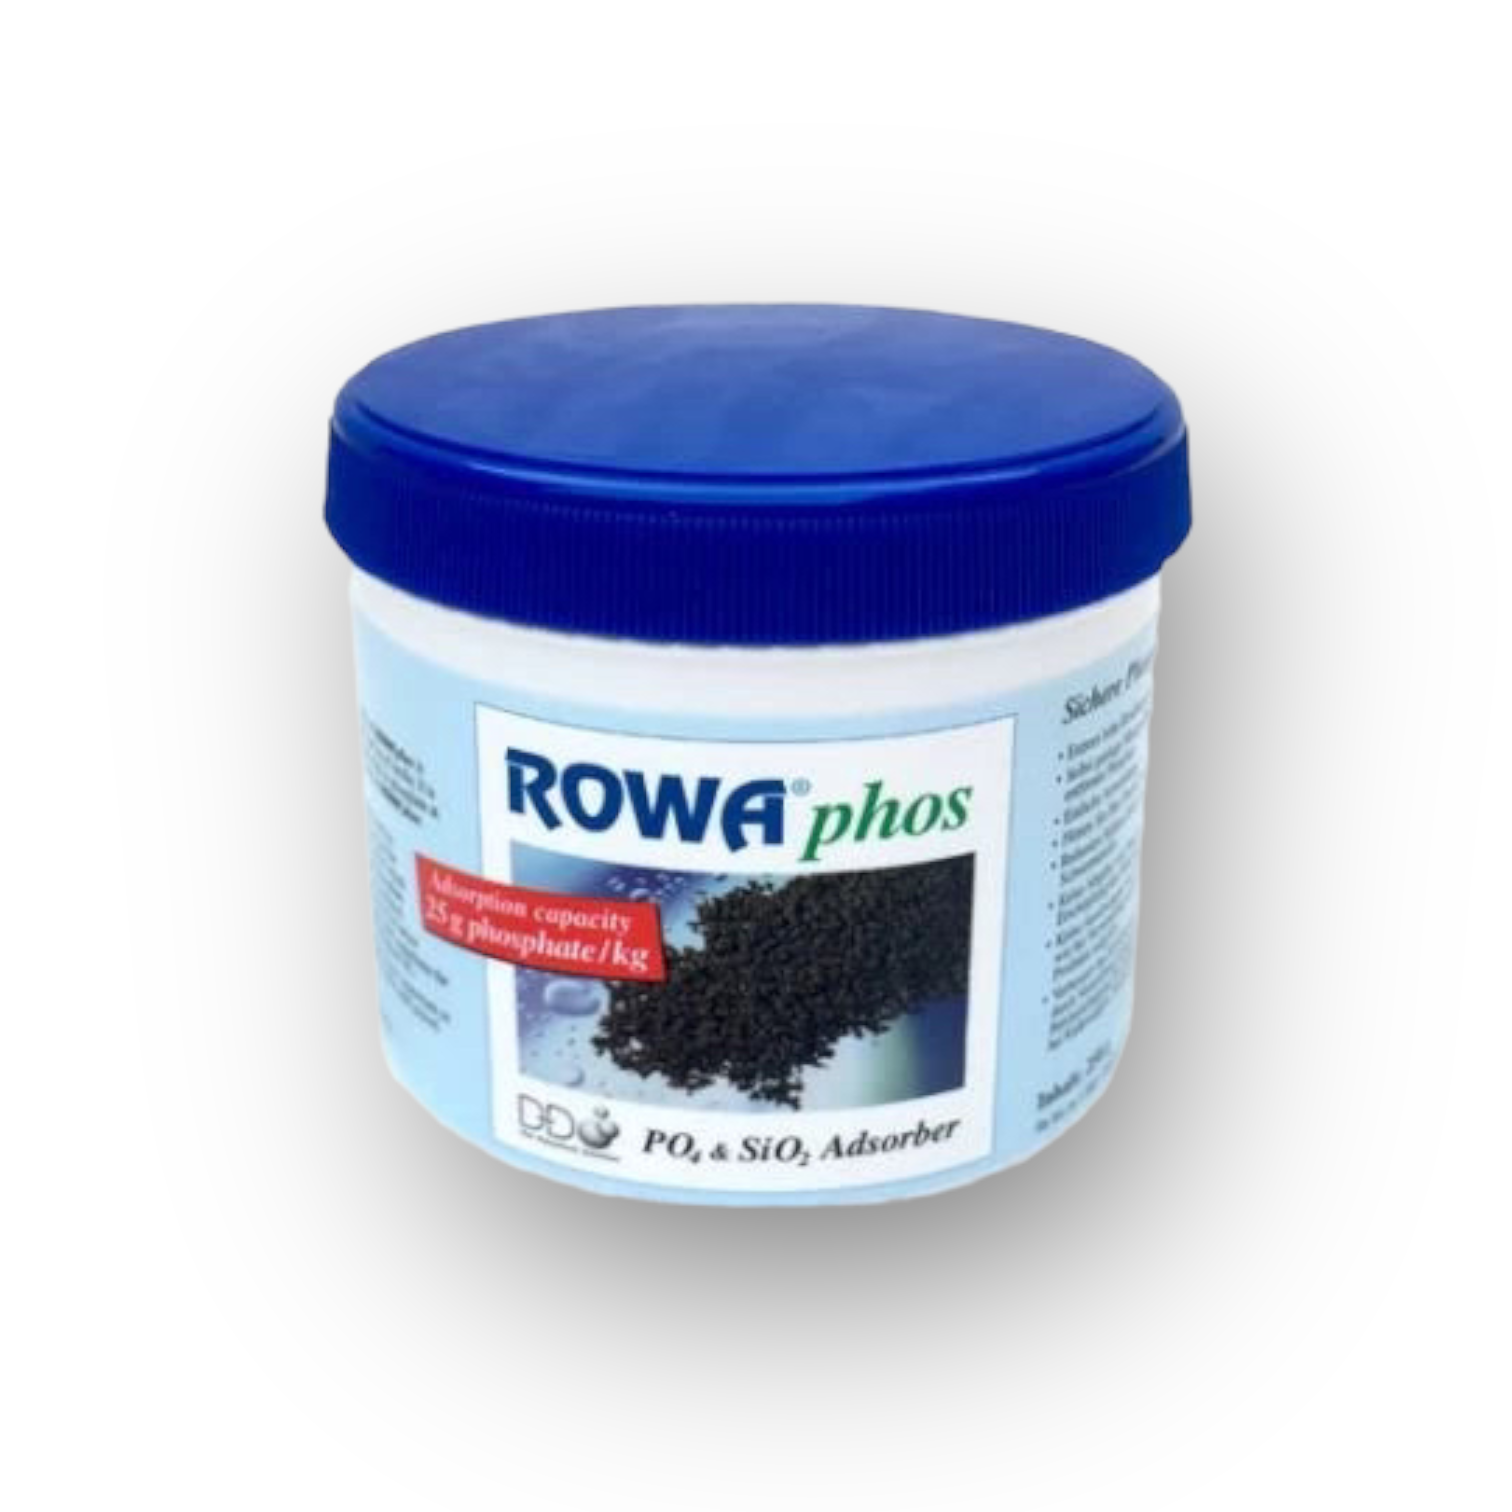 D-D RowaPhos Phosphate Remover 250g